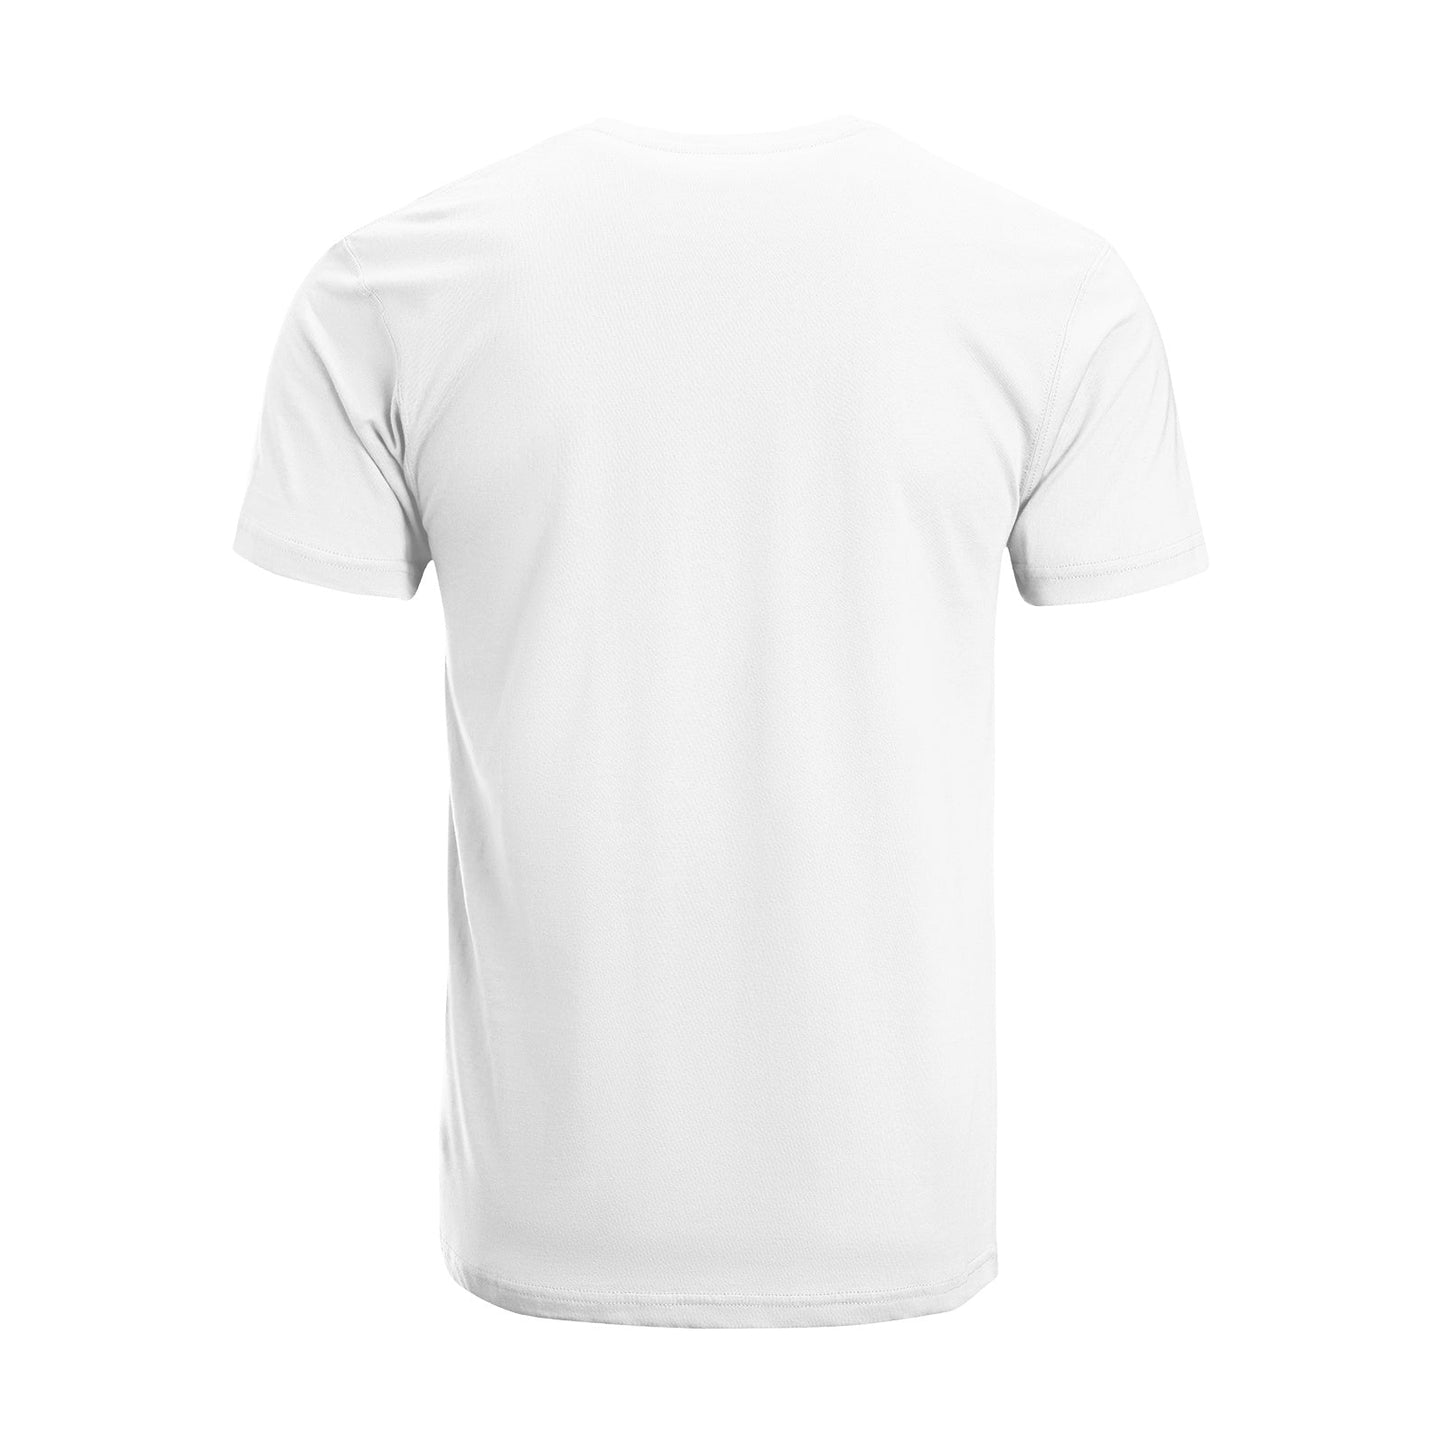 Unisex Short Sleeve Crew Neck Cotton Jersey T-Shirt USA 10